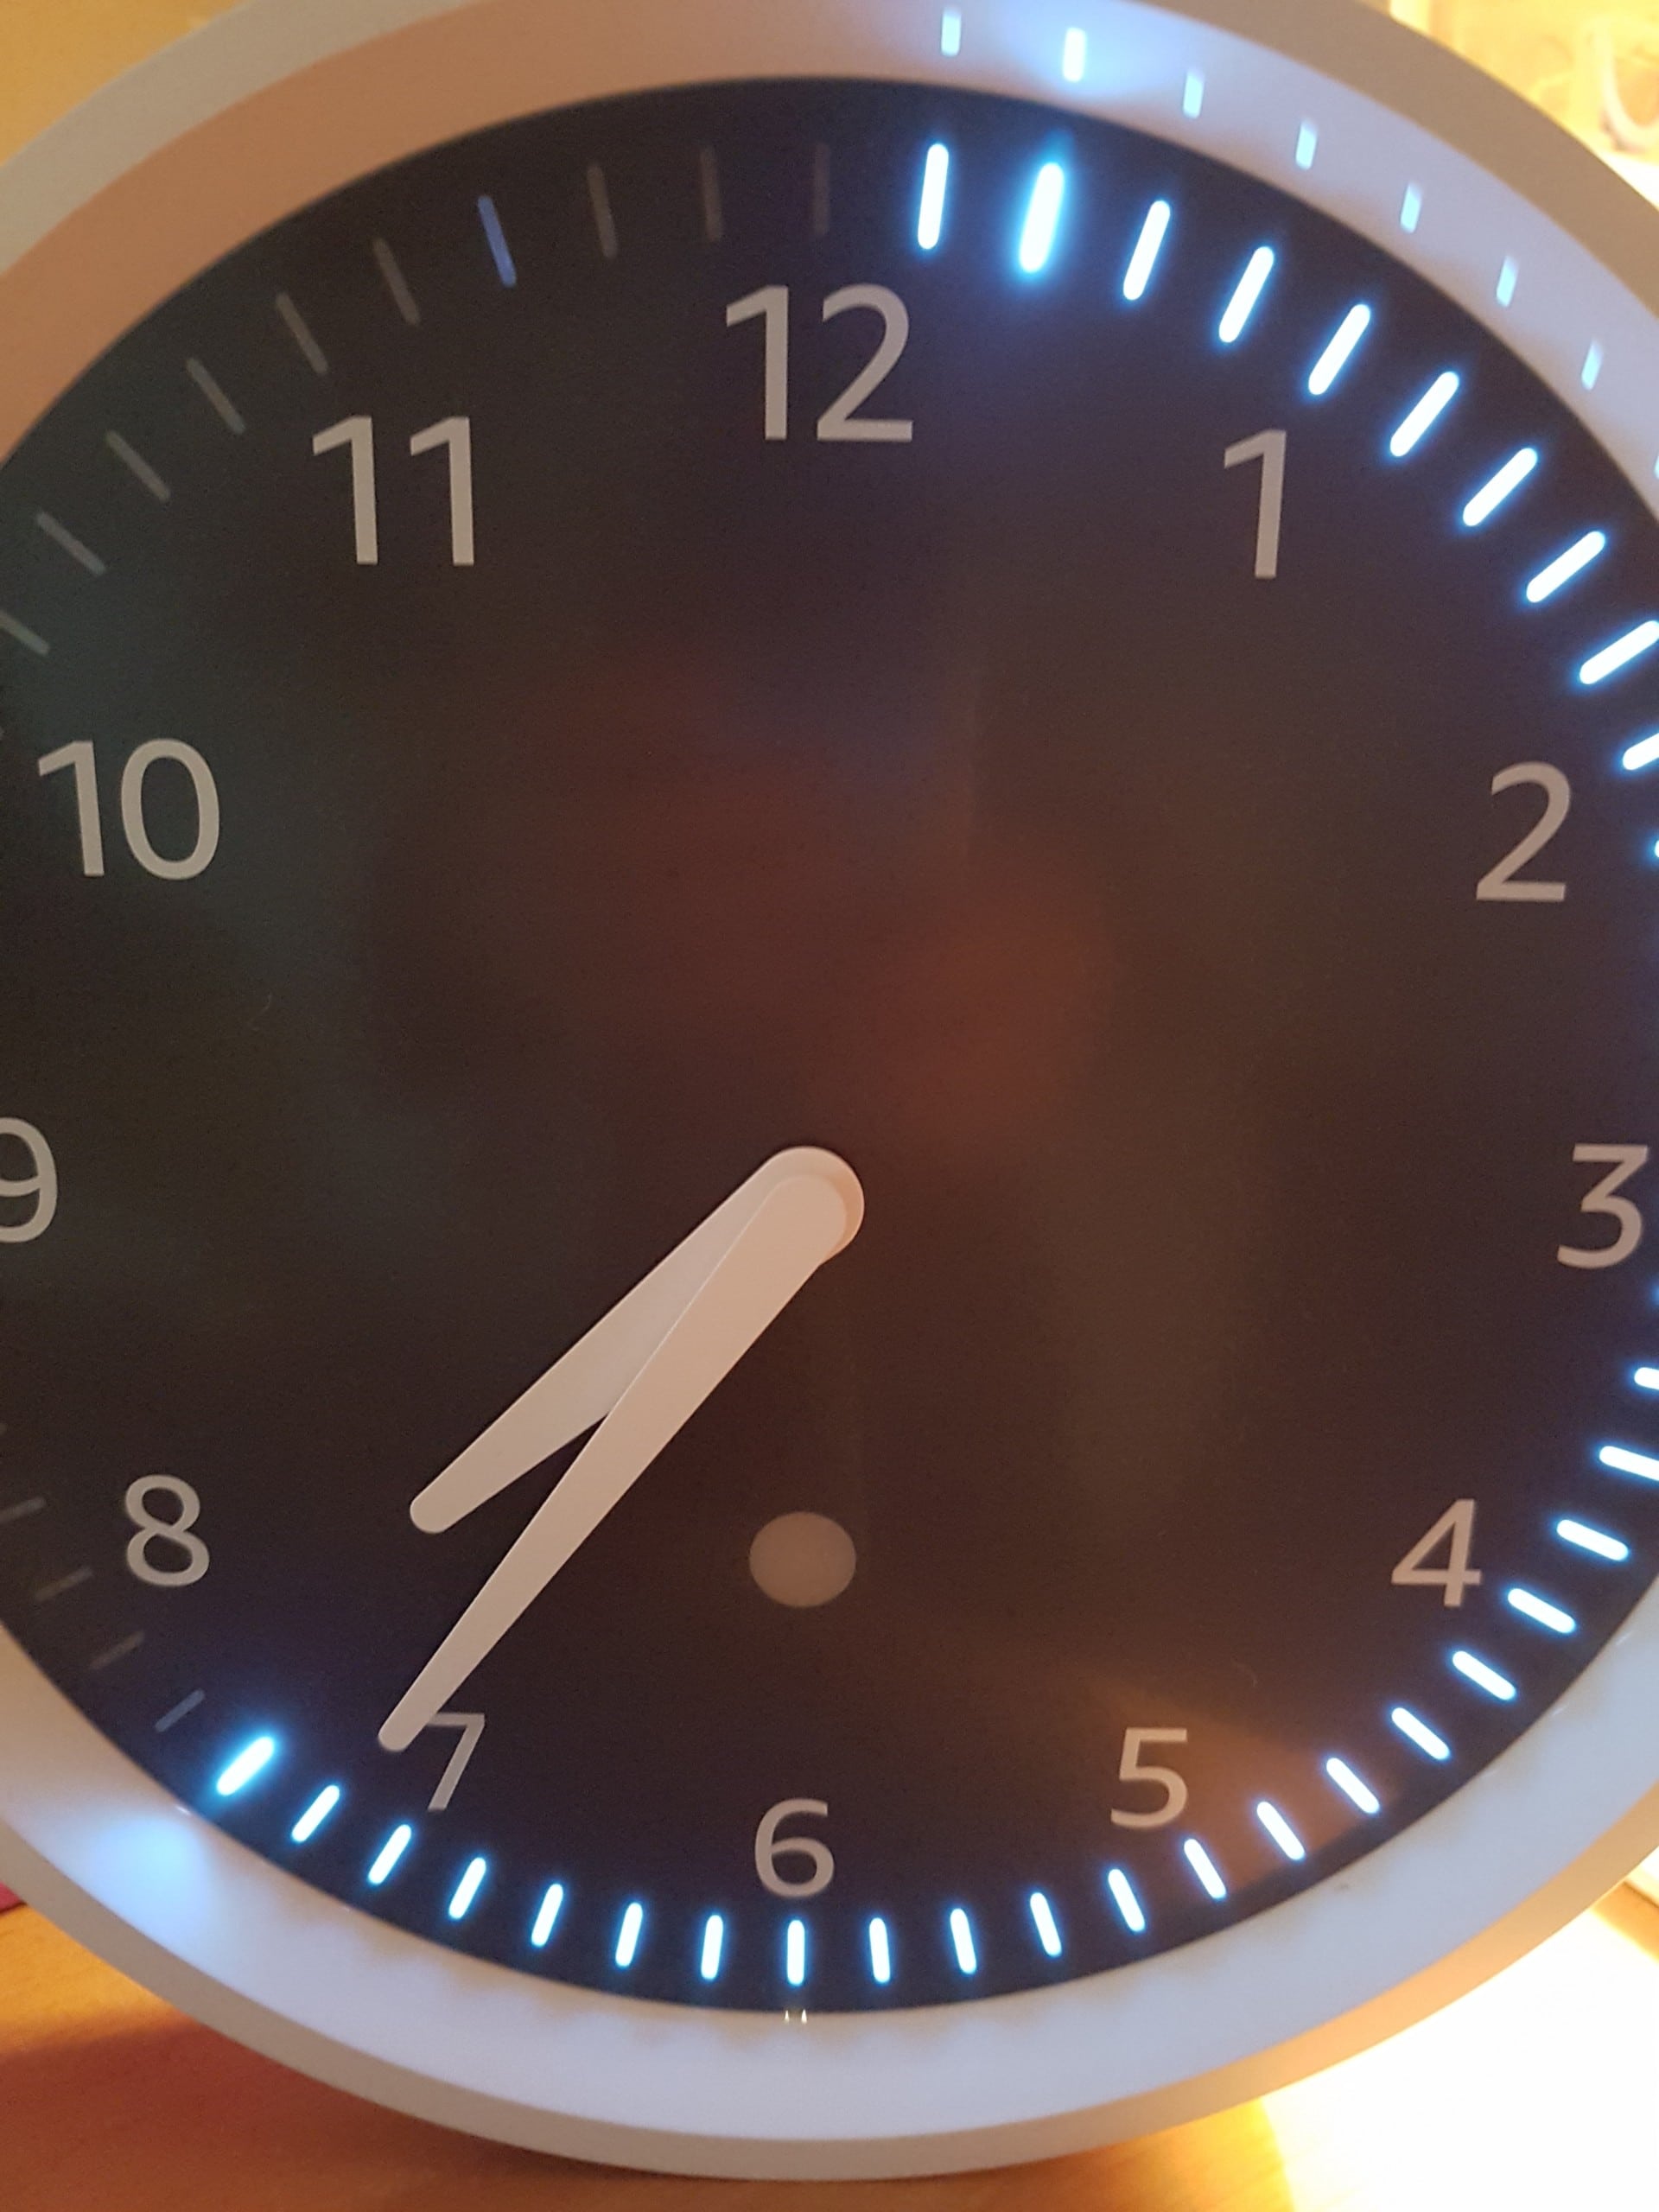 Test Echo Wall Clock : notre avis sur l'horloge connectée Alexa – Les  Alexiens